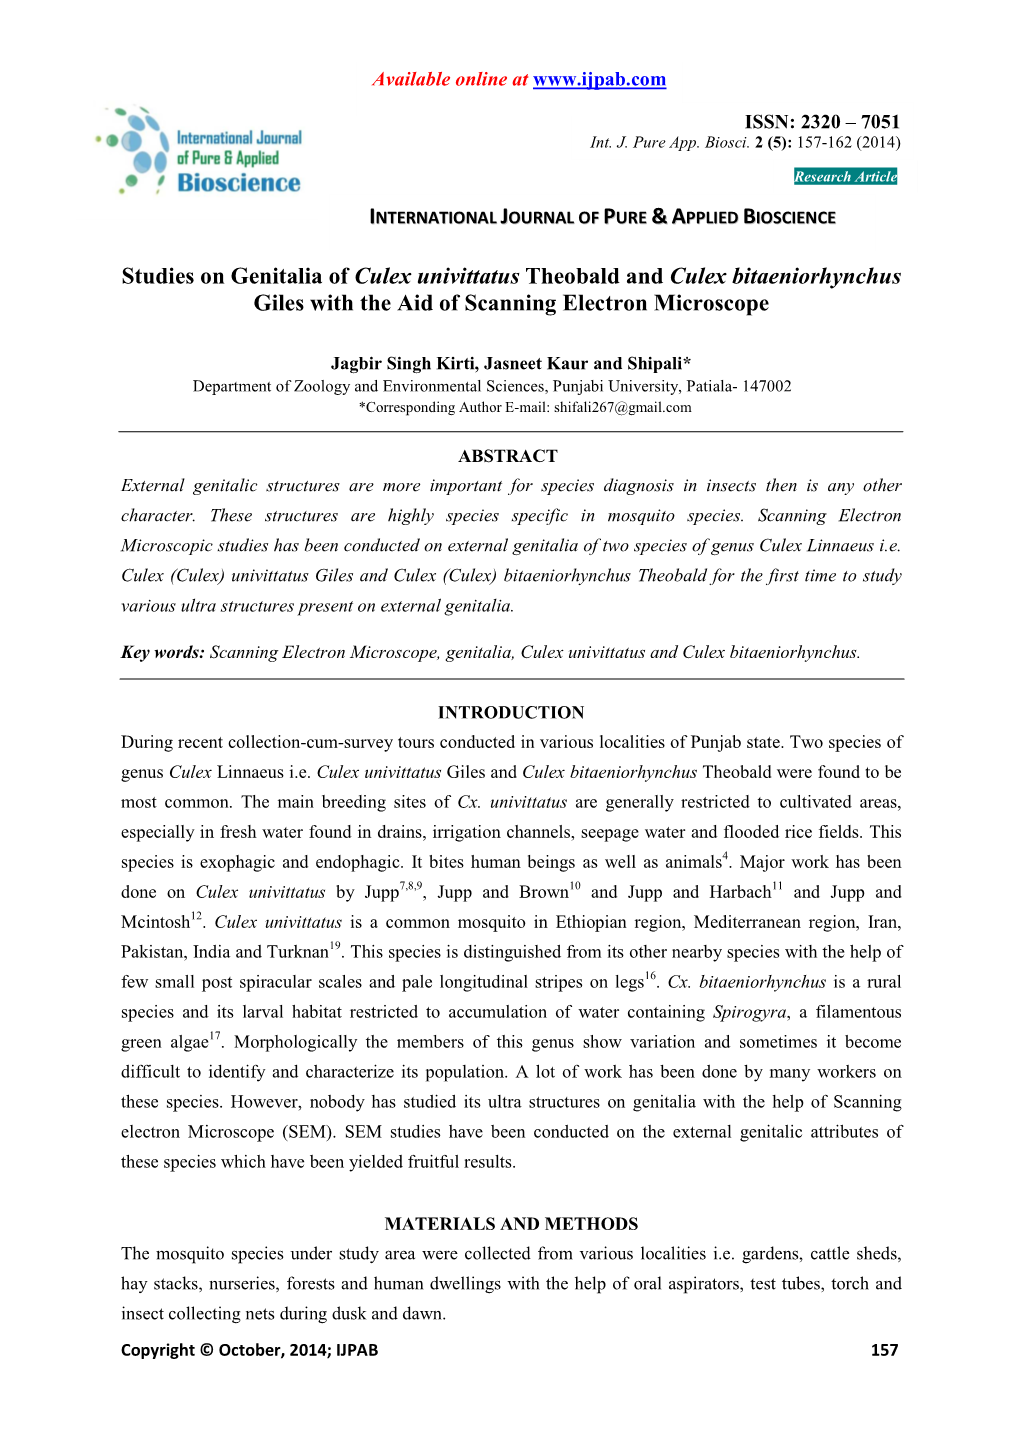 Studies on Genitalia of Culex Univittatus Theobald and Culex Bitaeniorhynchus Giles with the Aid of Scanning Electron Microscope